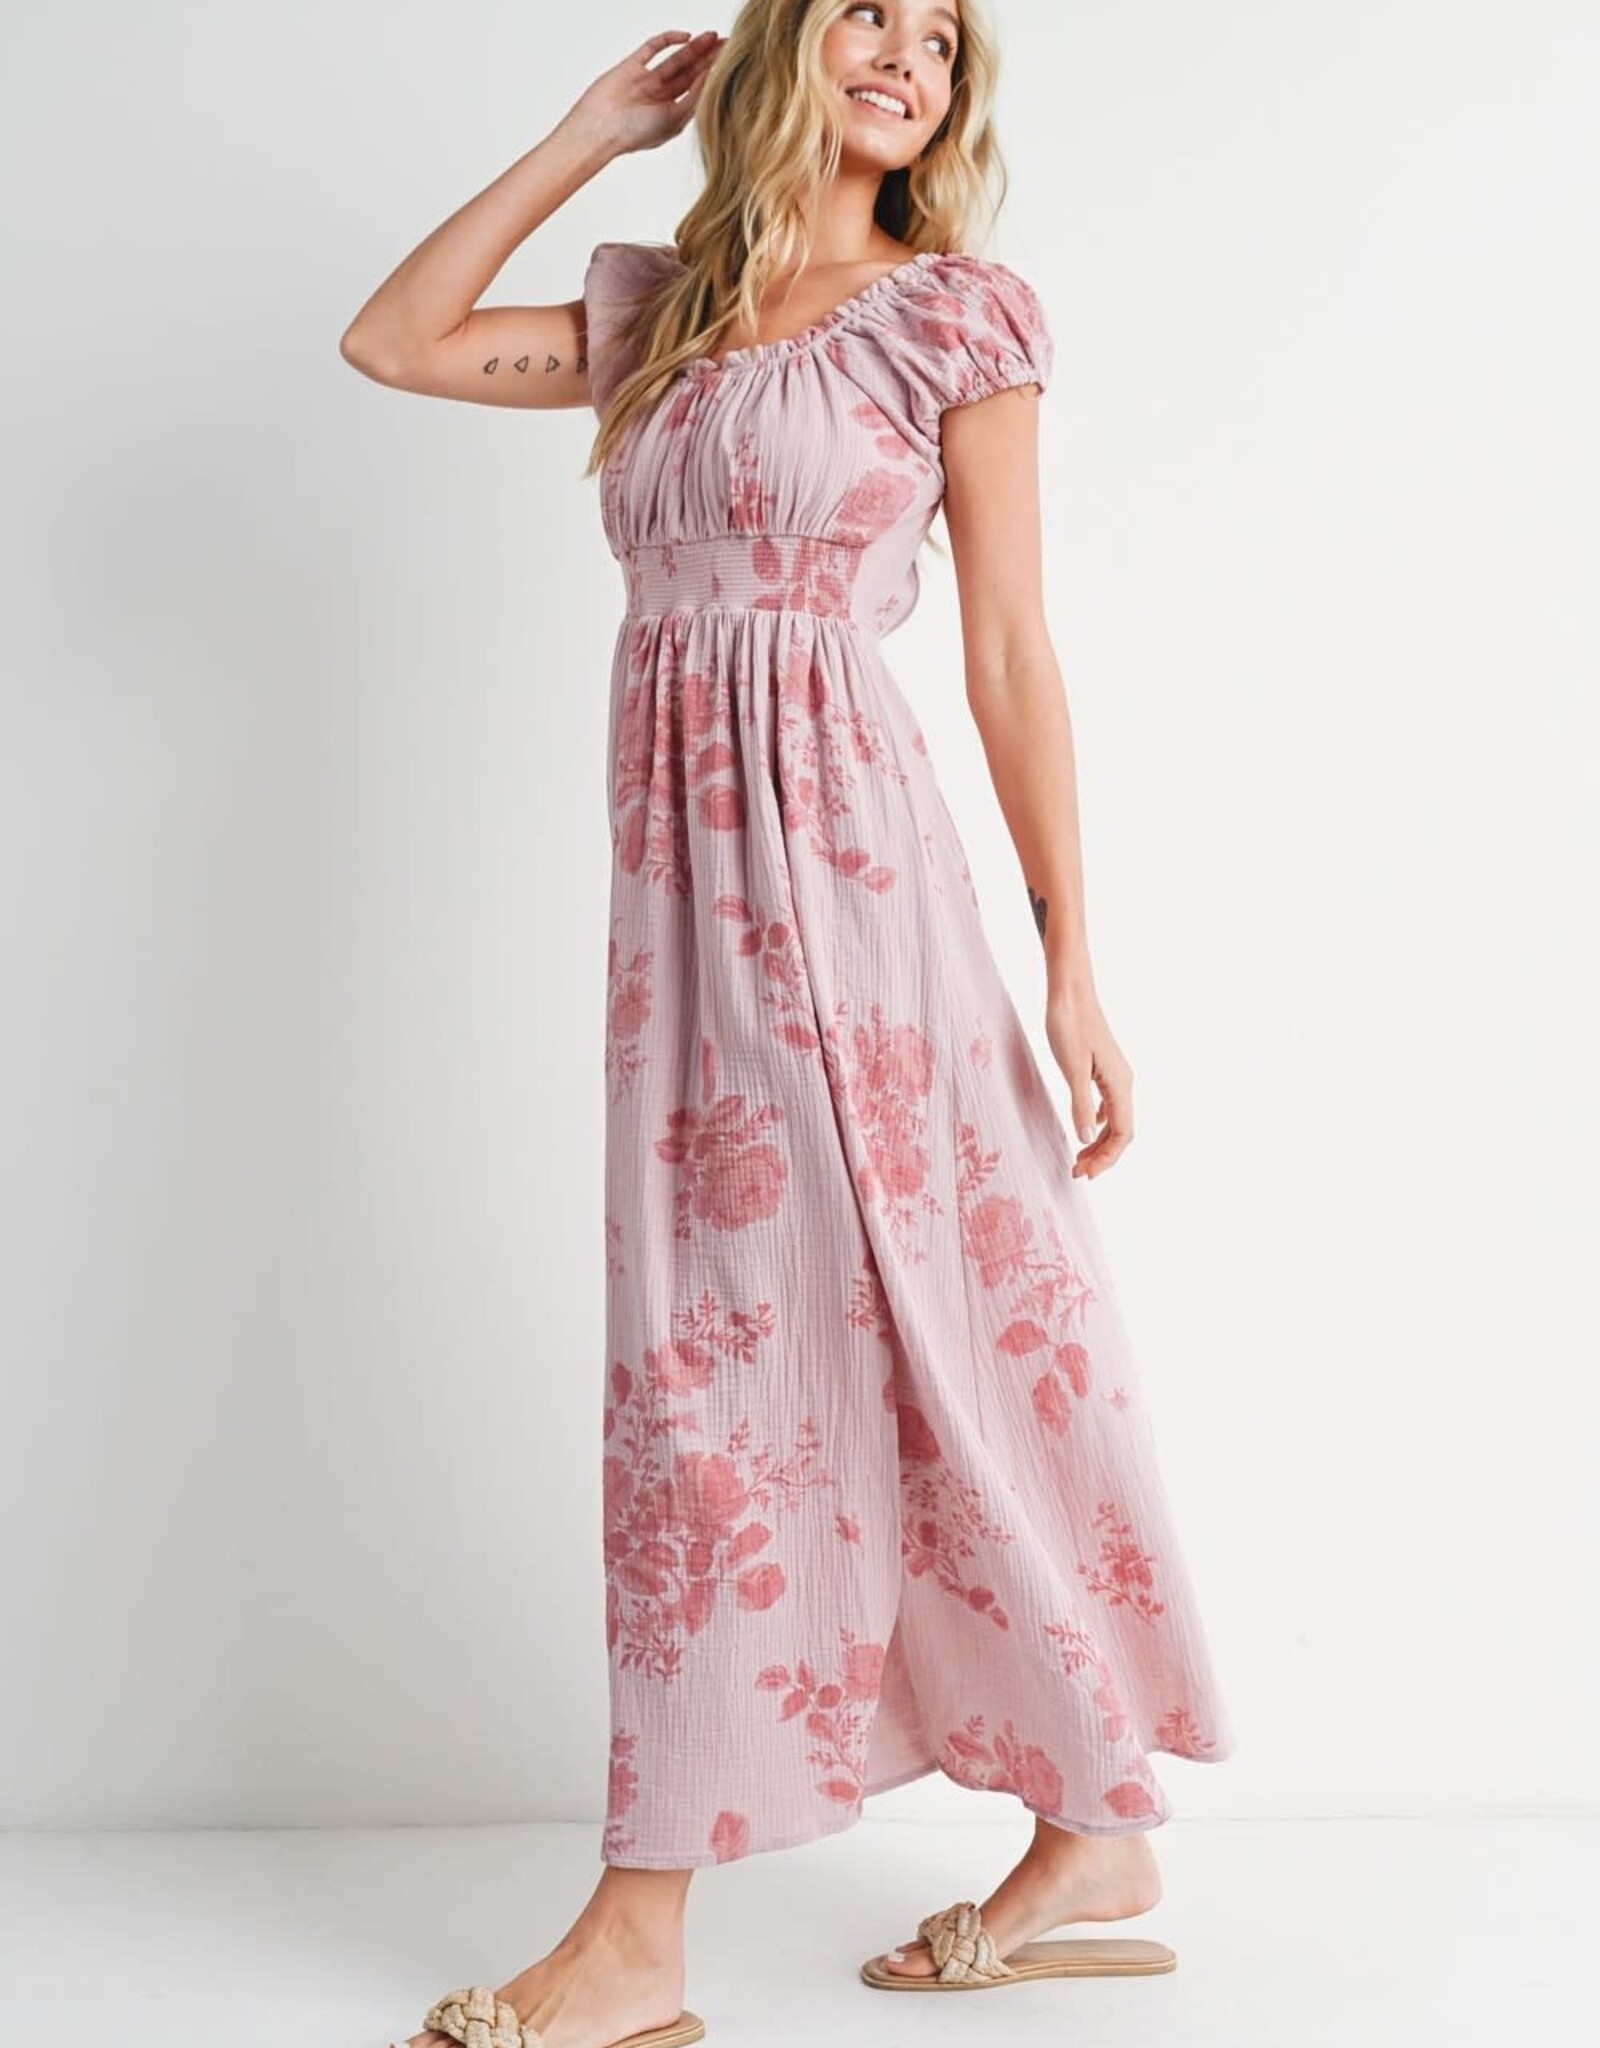 Miss Bliss Floral Cotton Gauze Dress-Dusty Pink